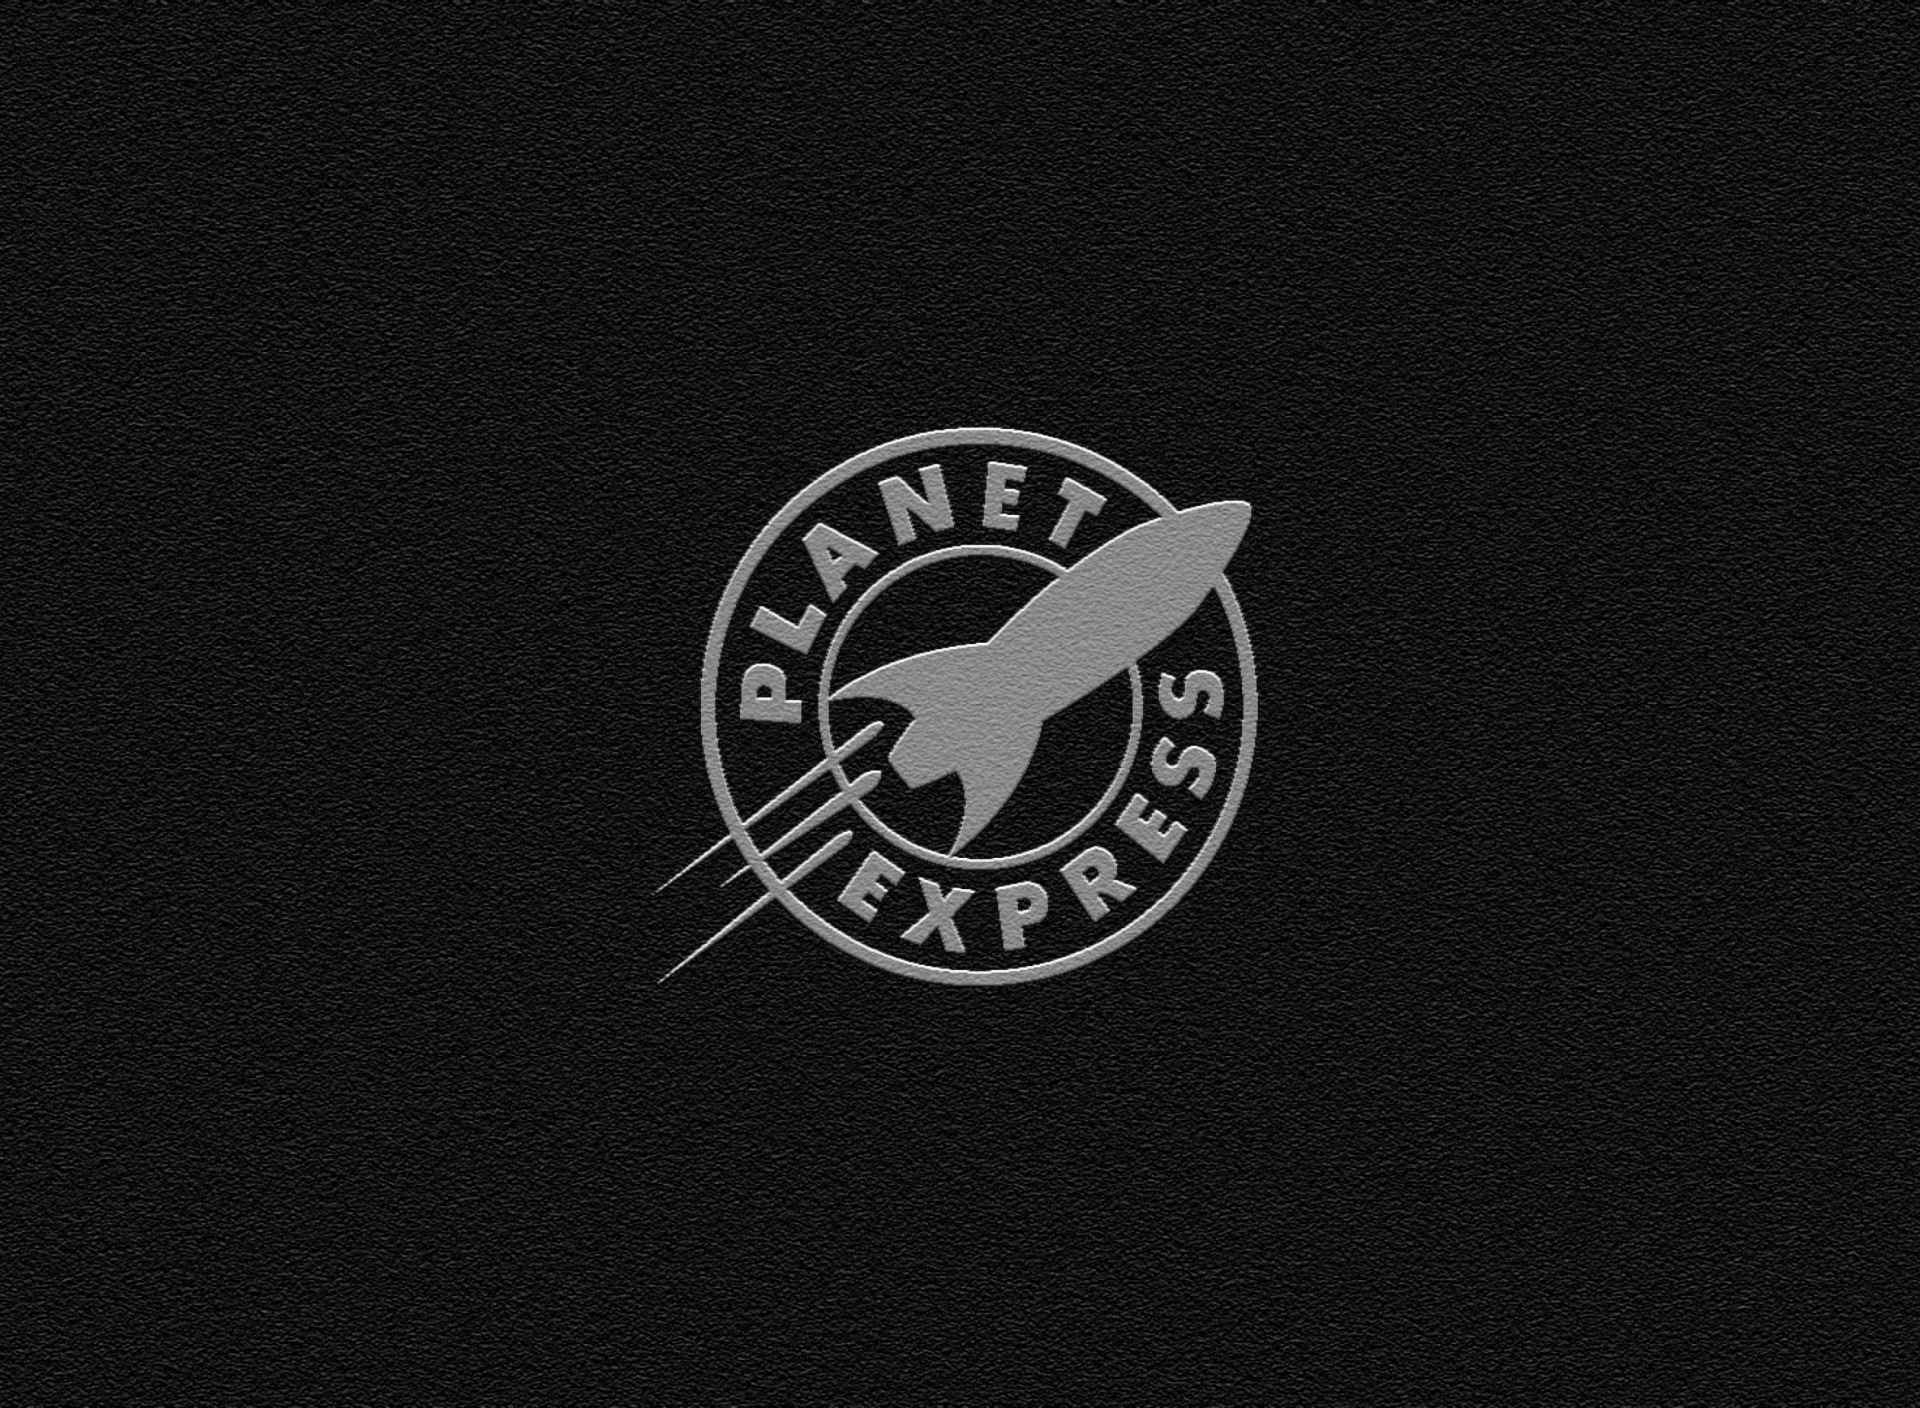 Planet Express wallpaper 1920x1408